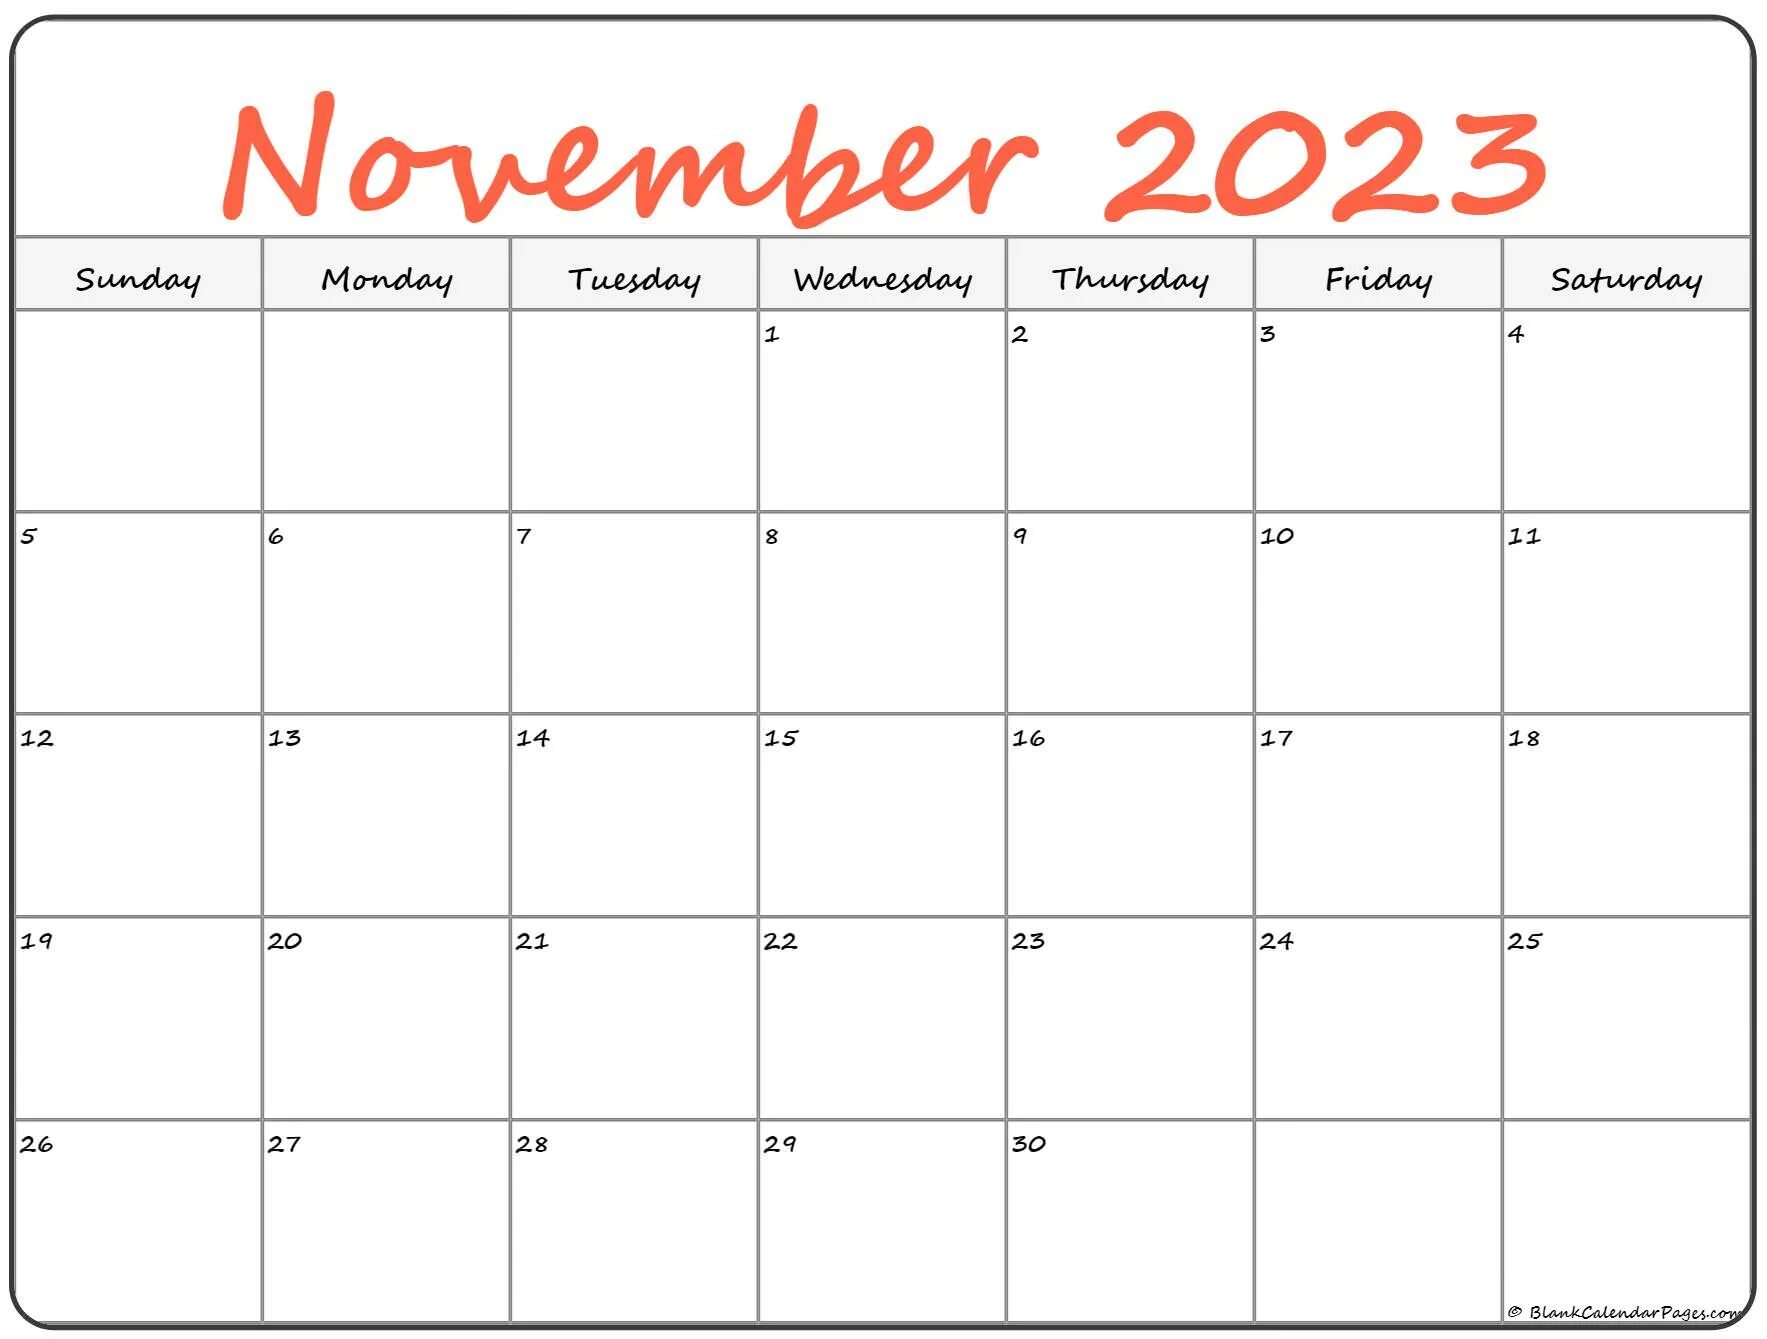 March 2022. Календарь декабрь 2022. Календарь ноябрь 2022. Календарь на март 2022 года. Сборник март 2023